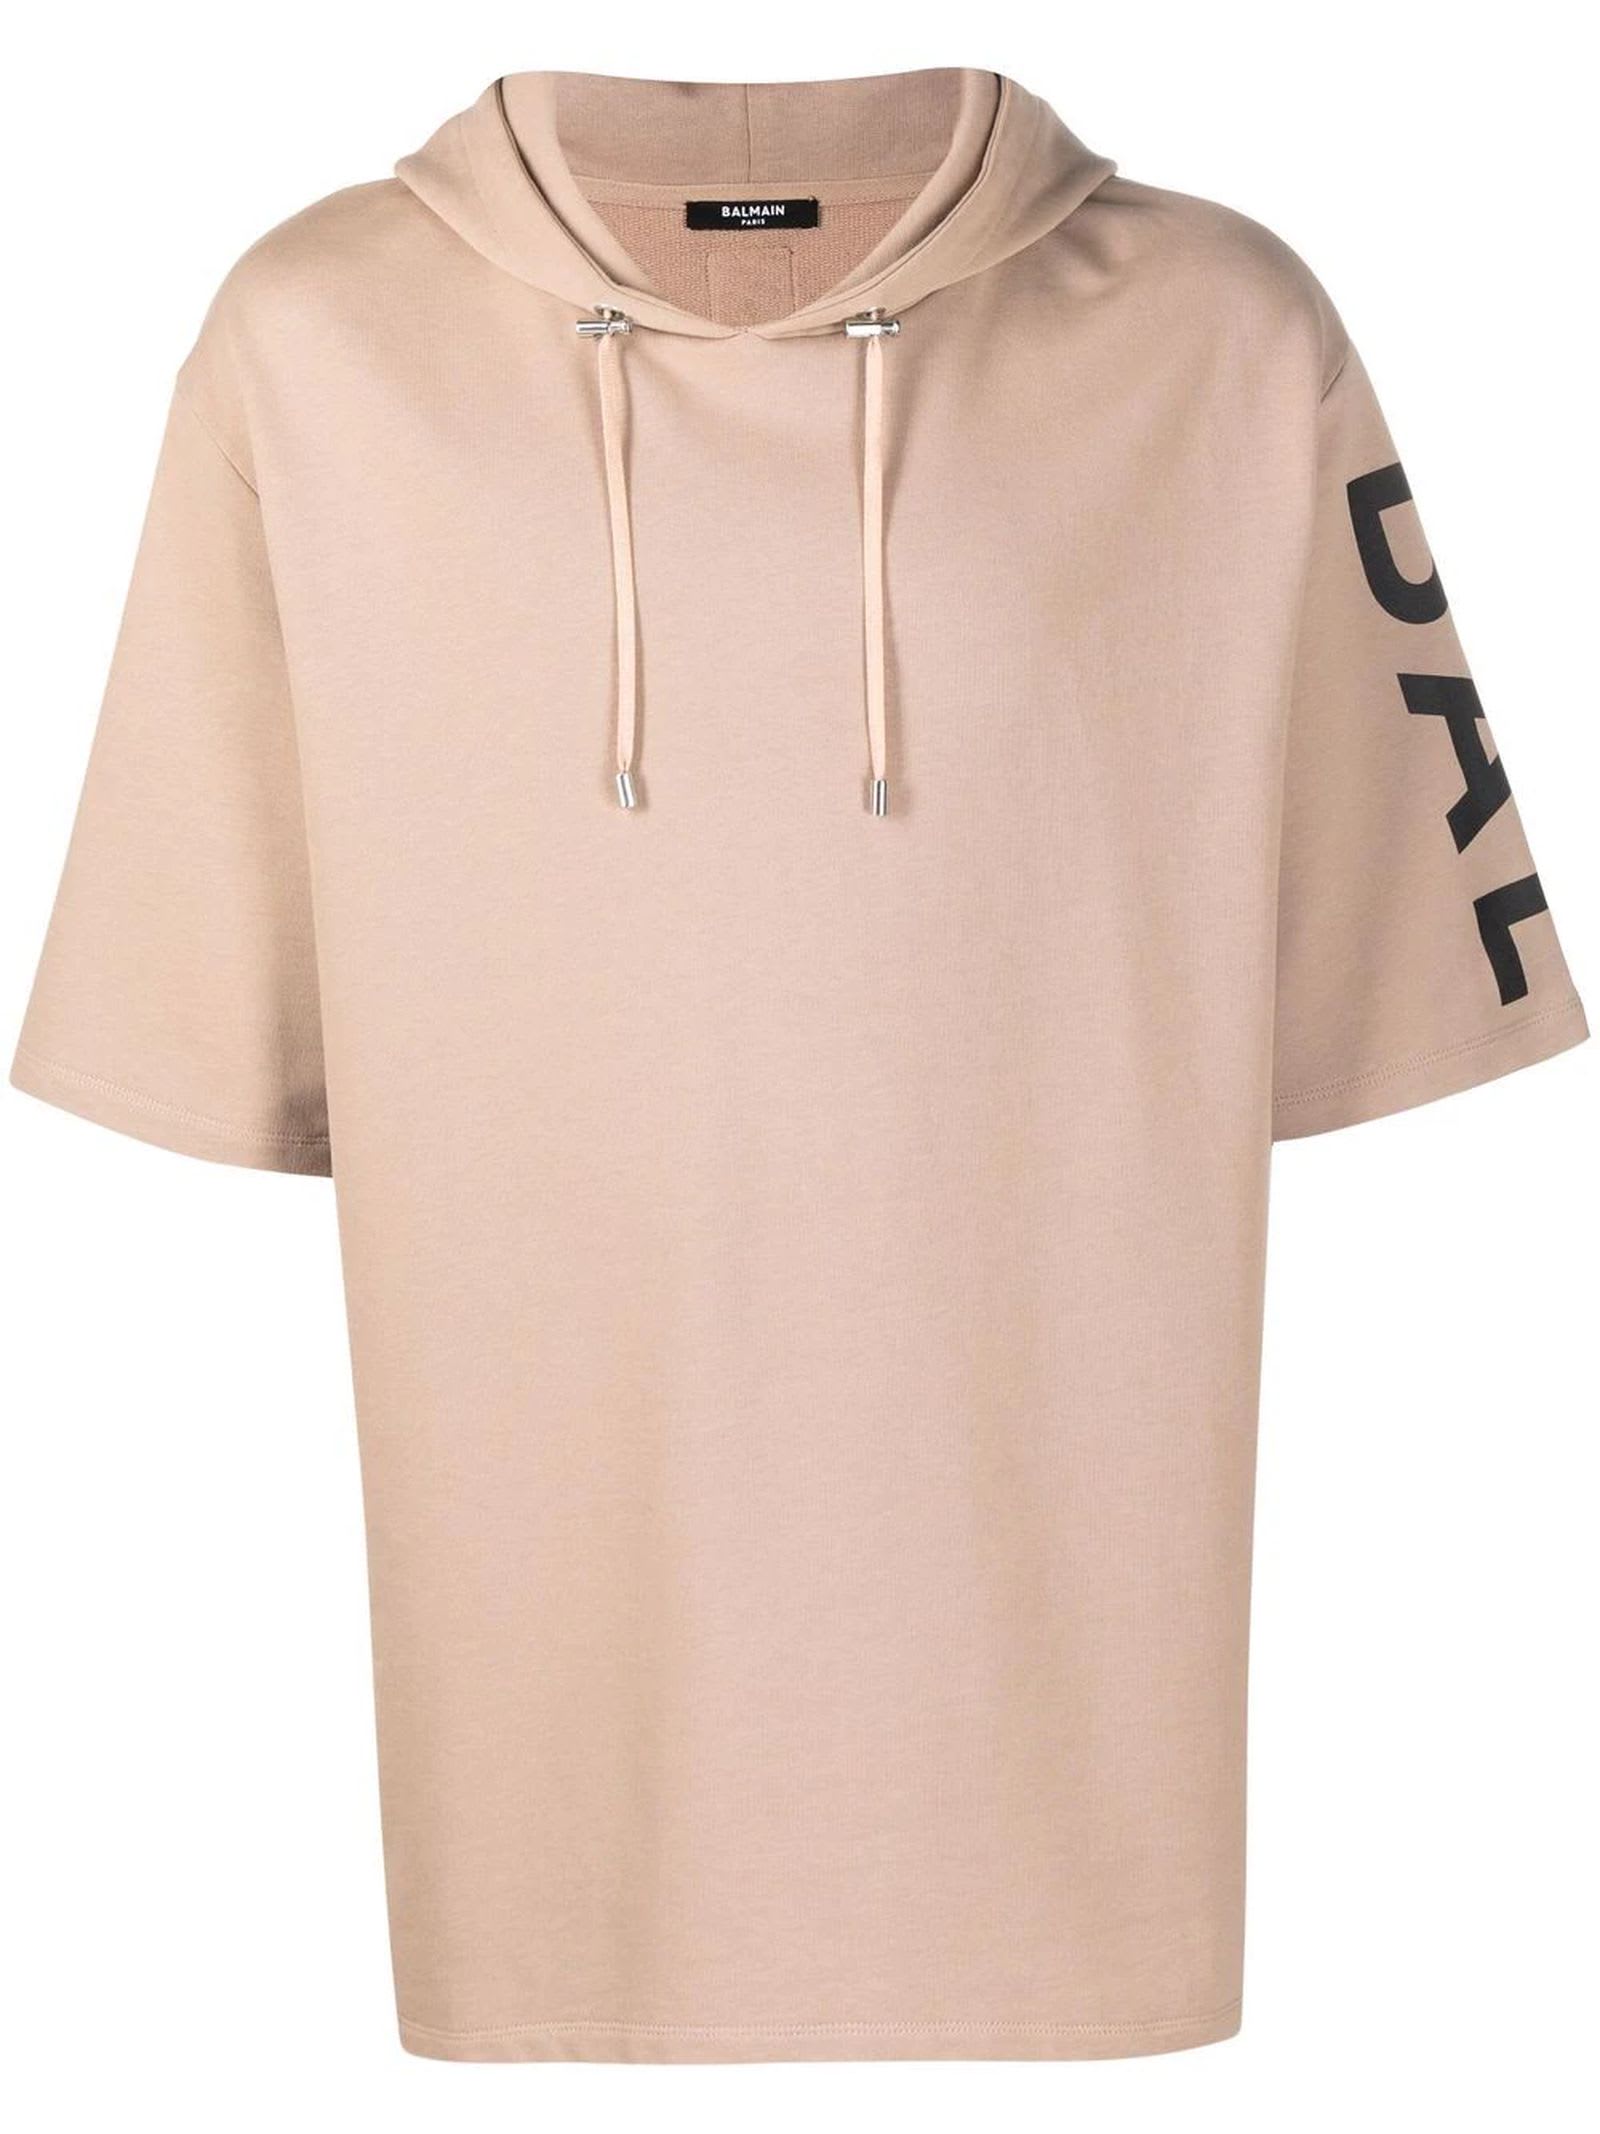 Balmain Oversized Sand-colored Cotton Hooded Sweatshirt